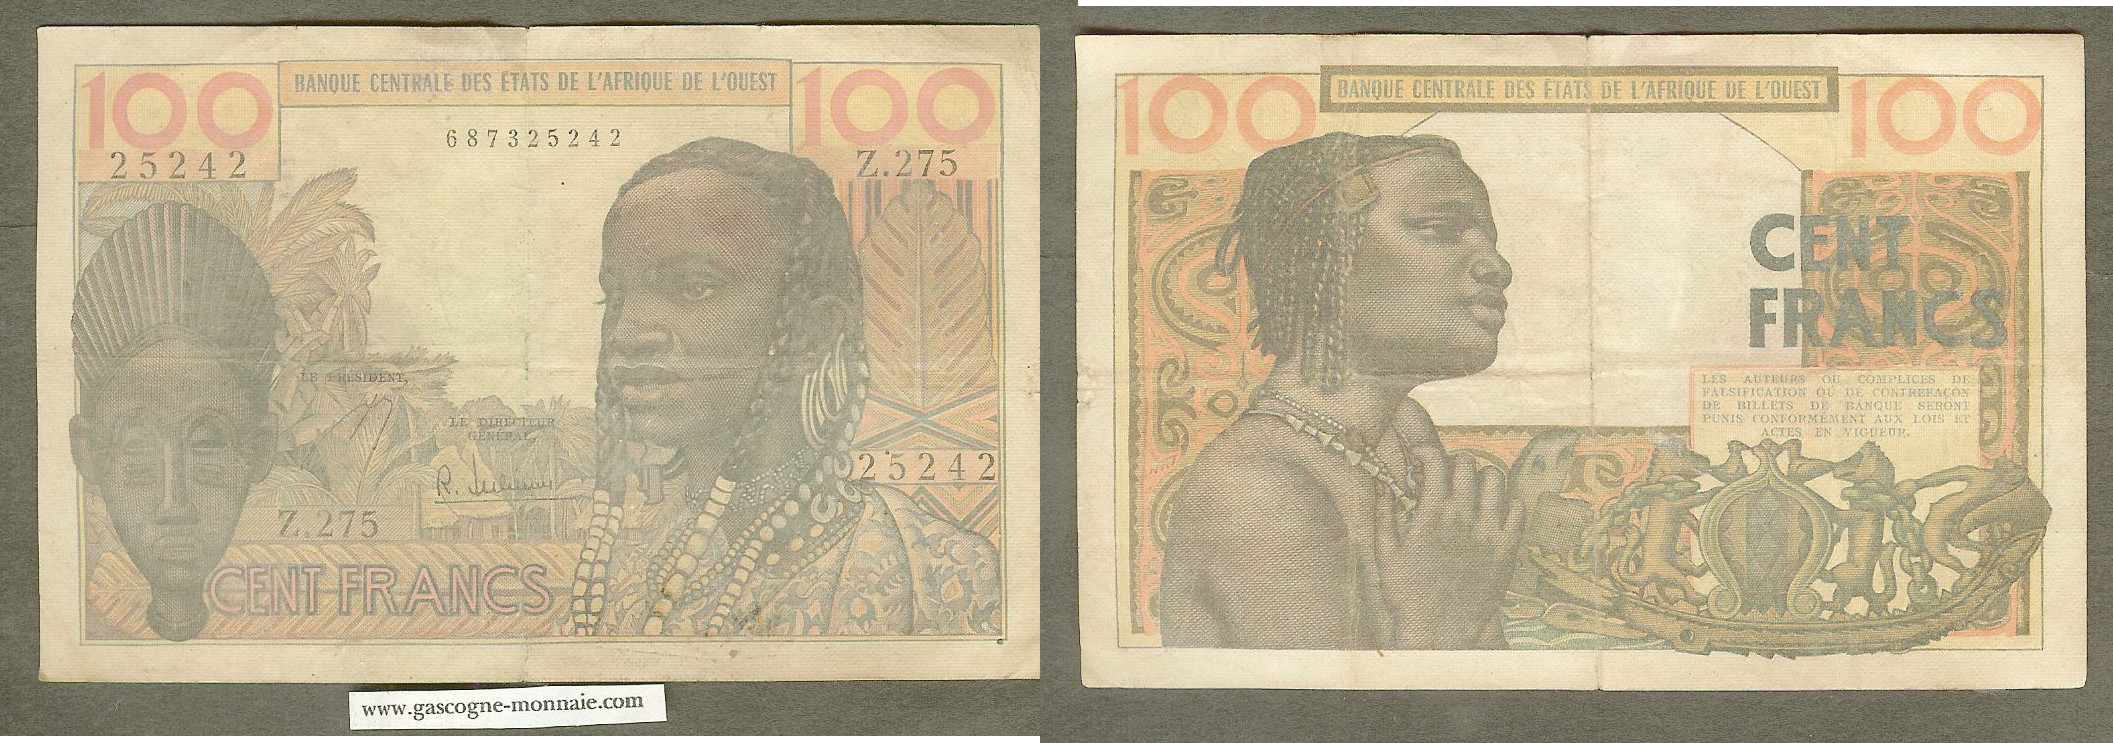 100 Francs ÉTATS DE L'AFRIQUE DE L'OUEST 1965 P.2b TTB-